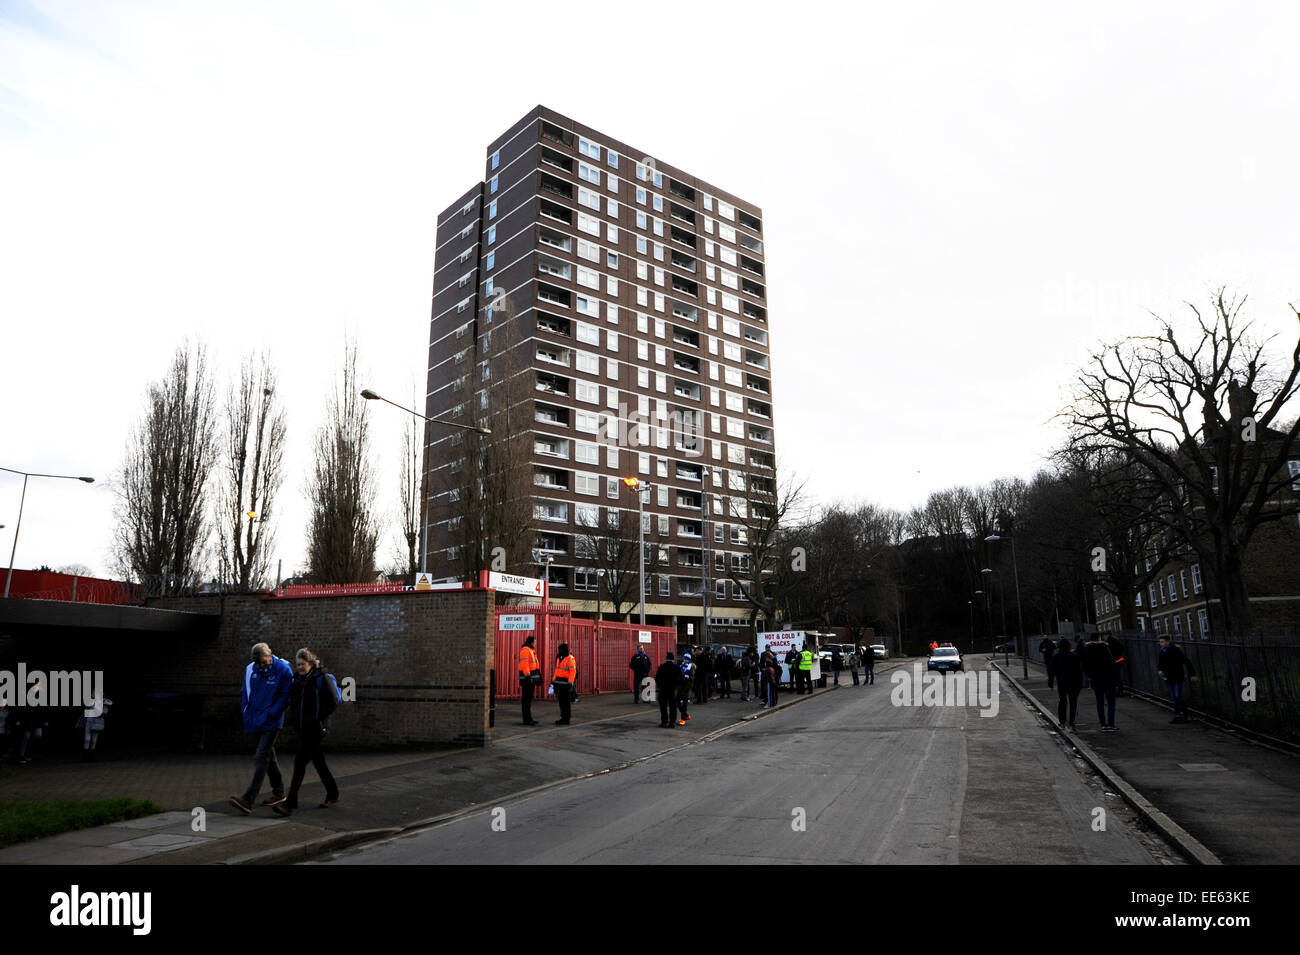 Charlton South East London UK Council flache Block neben The Valley Charlton Athletic Fußballplatz Stockfoto